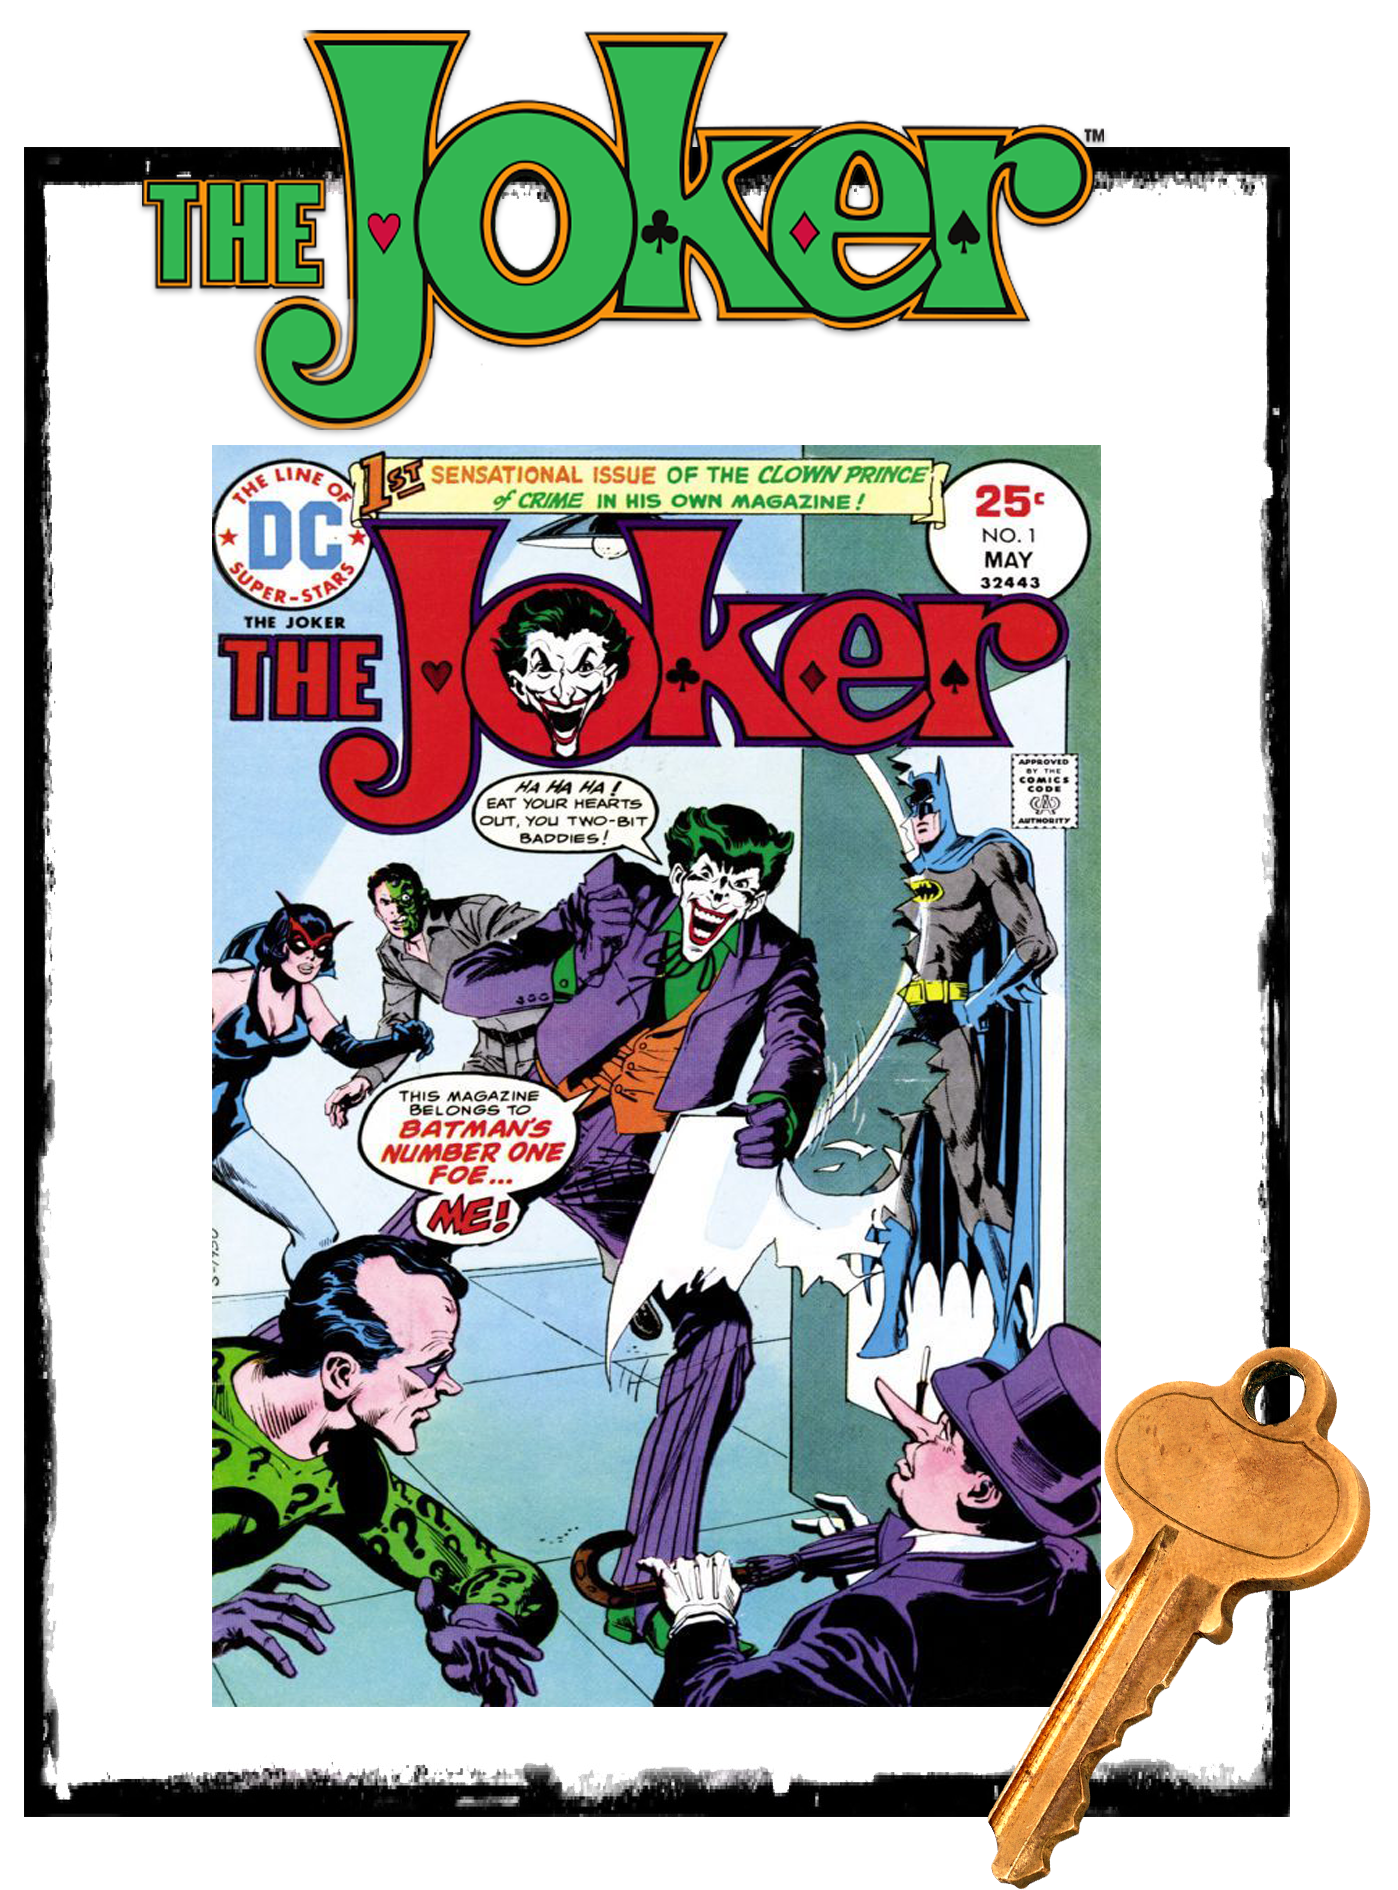 JOKER - #1 (1975 - CONDITION VF+/NM)